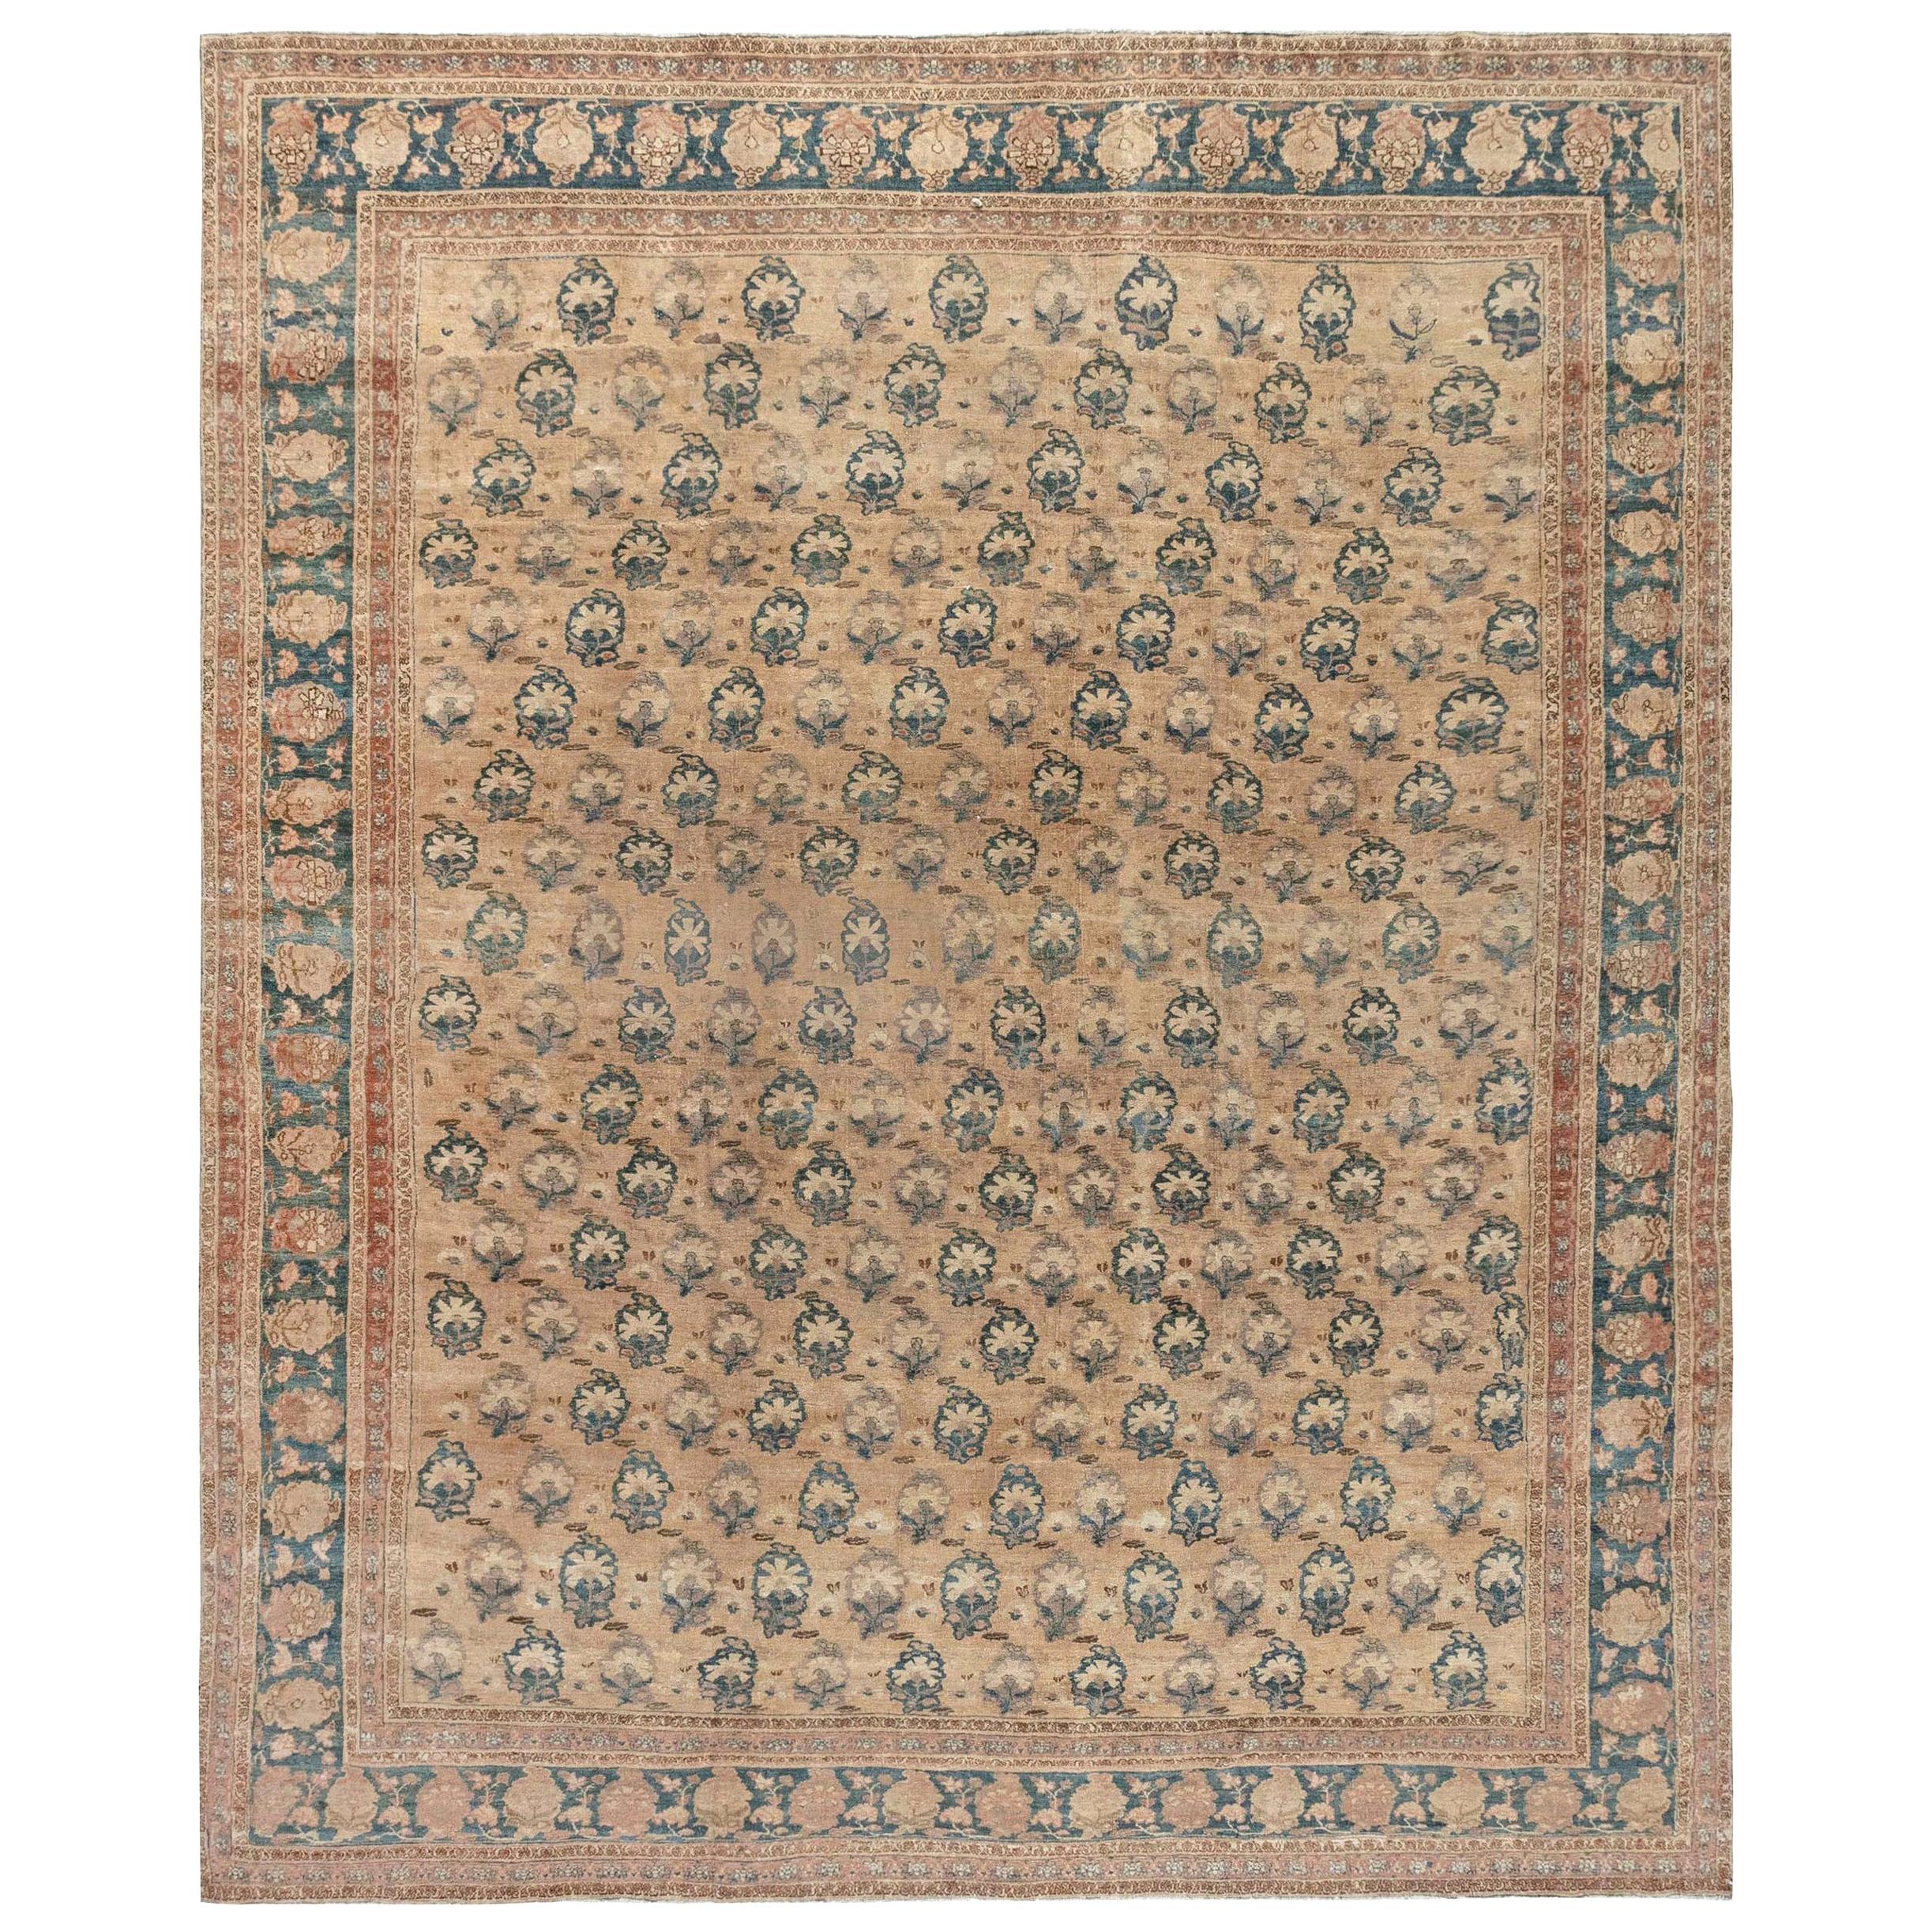 Early 20th Century Persian Tabriz Botanic Wool Rug